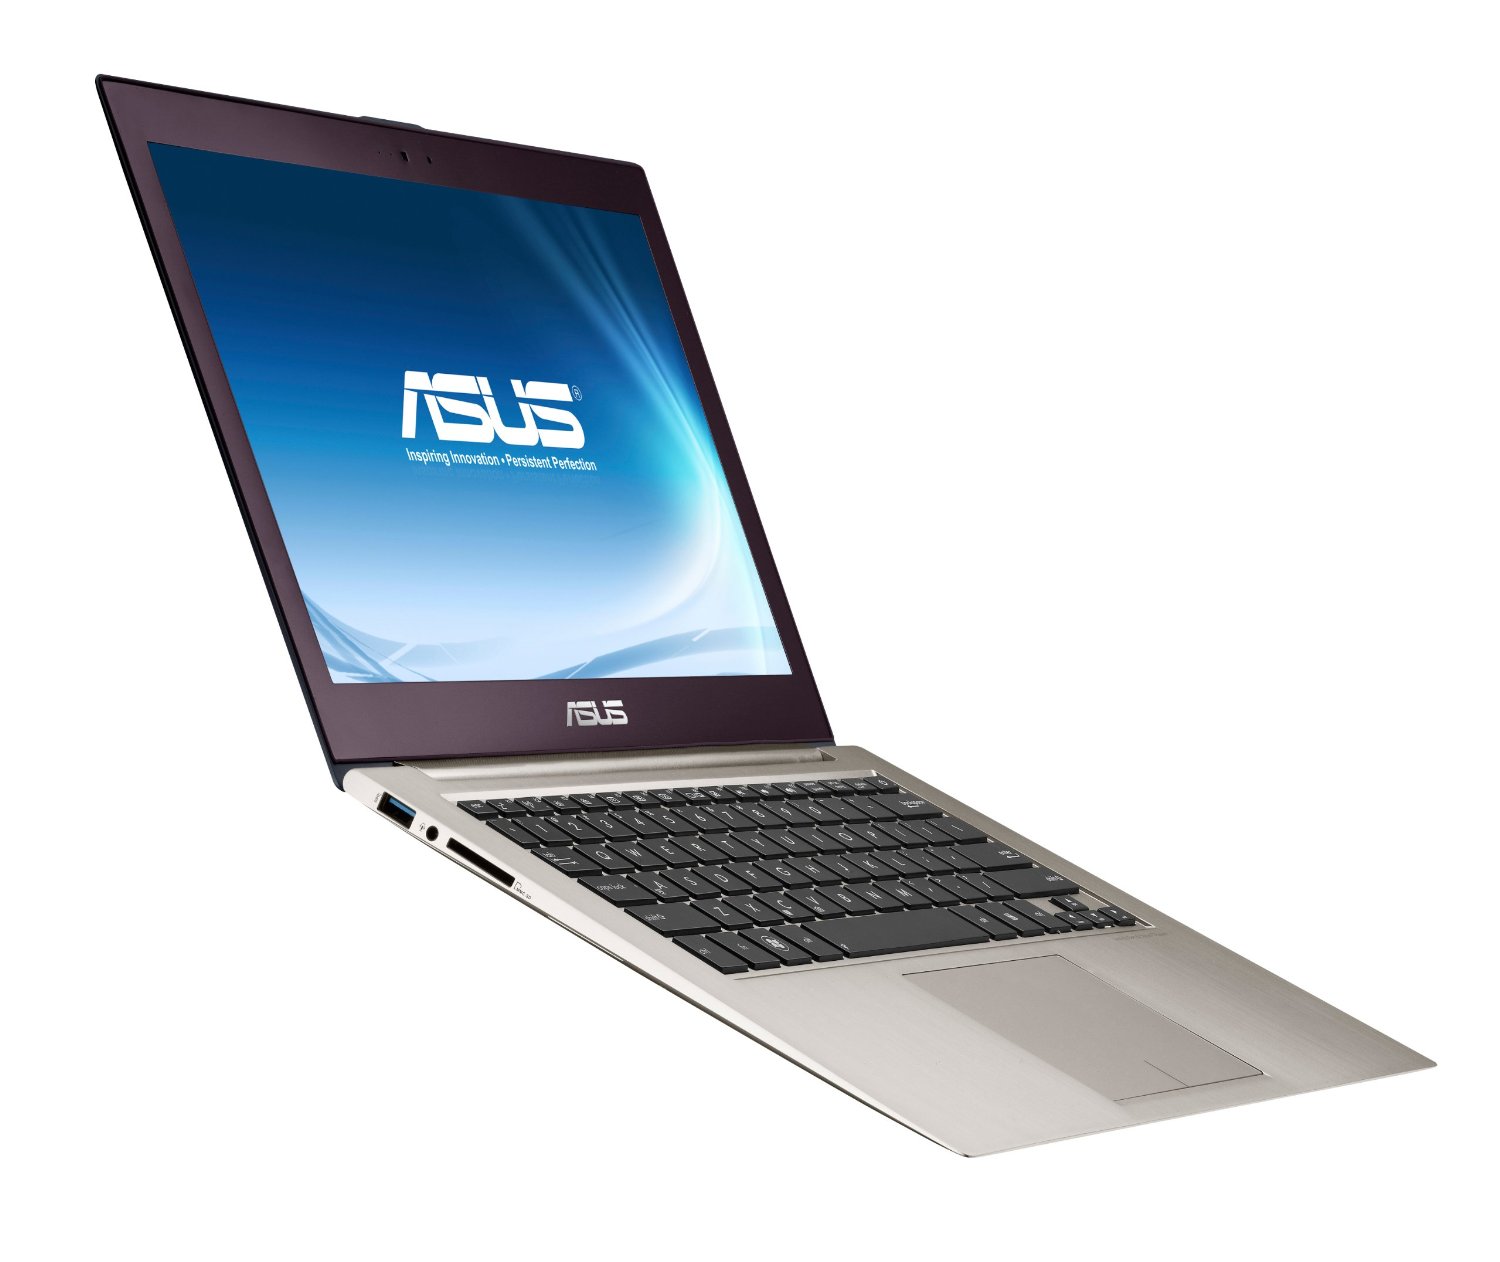 ASUS Zenbook UX32A-DB51 13.3-Inch HD LED Ultrabook